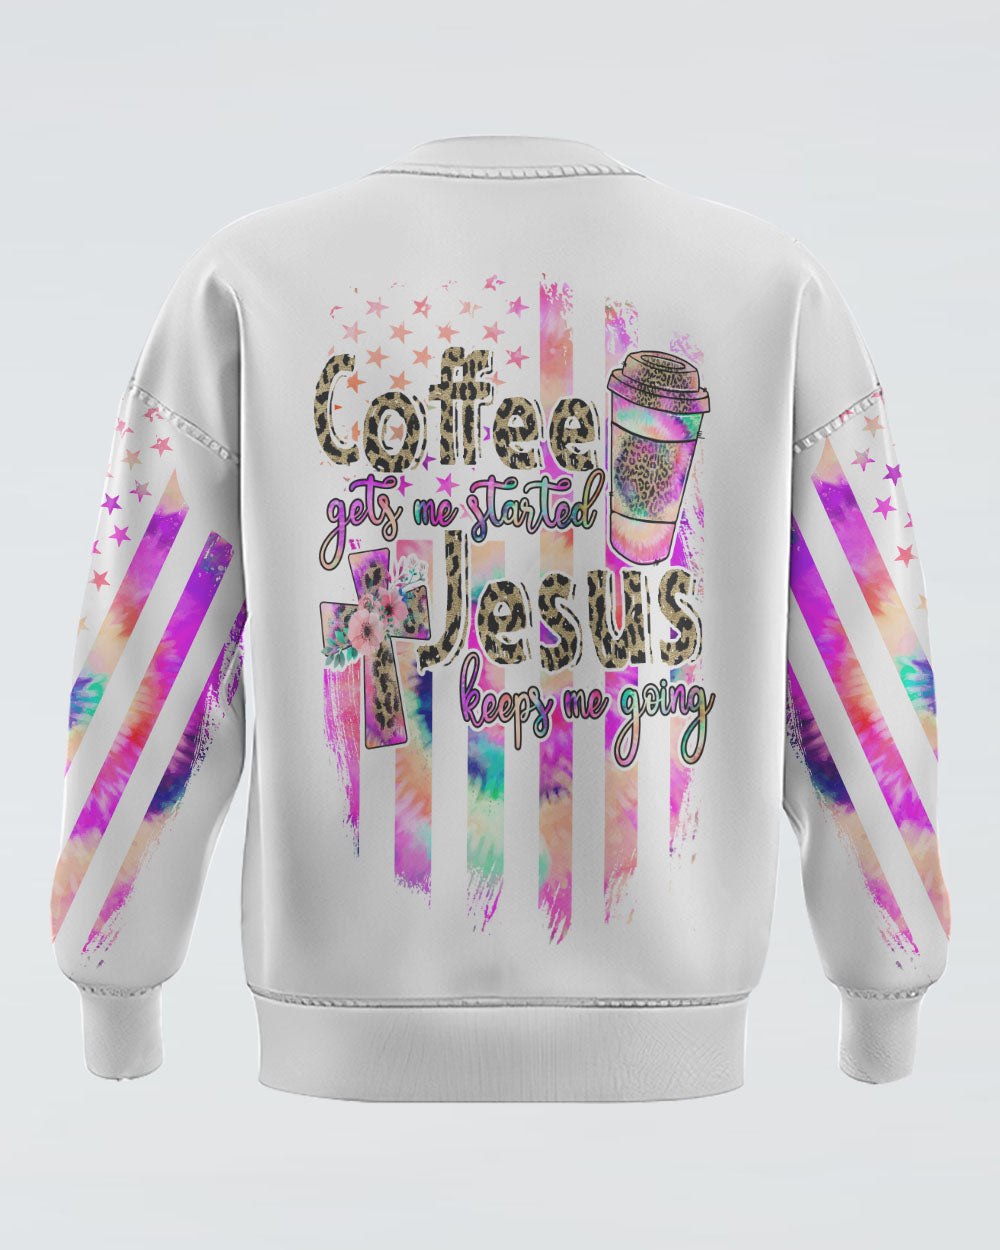 Coffee Gets Me Started Jesus Keeps Me Going Colorful Cross Faith Flag Tie Dye Women's Christian Sweatshirt